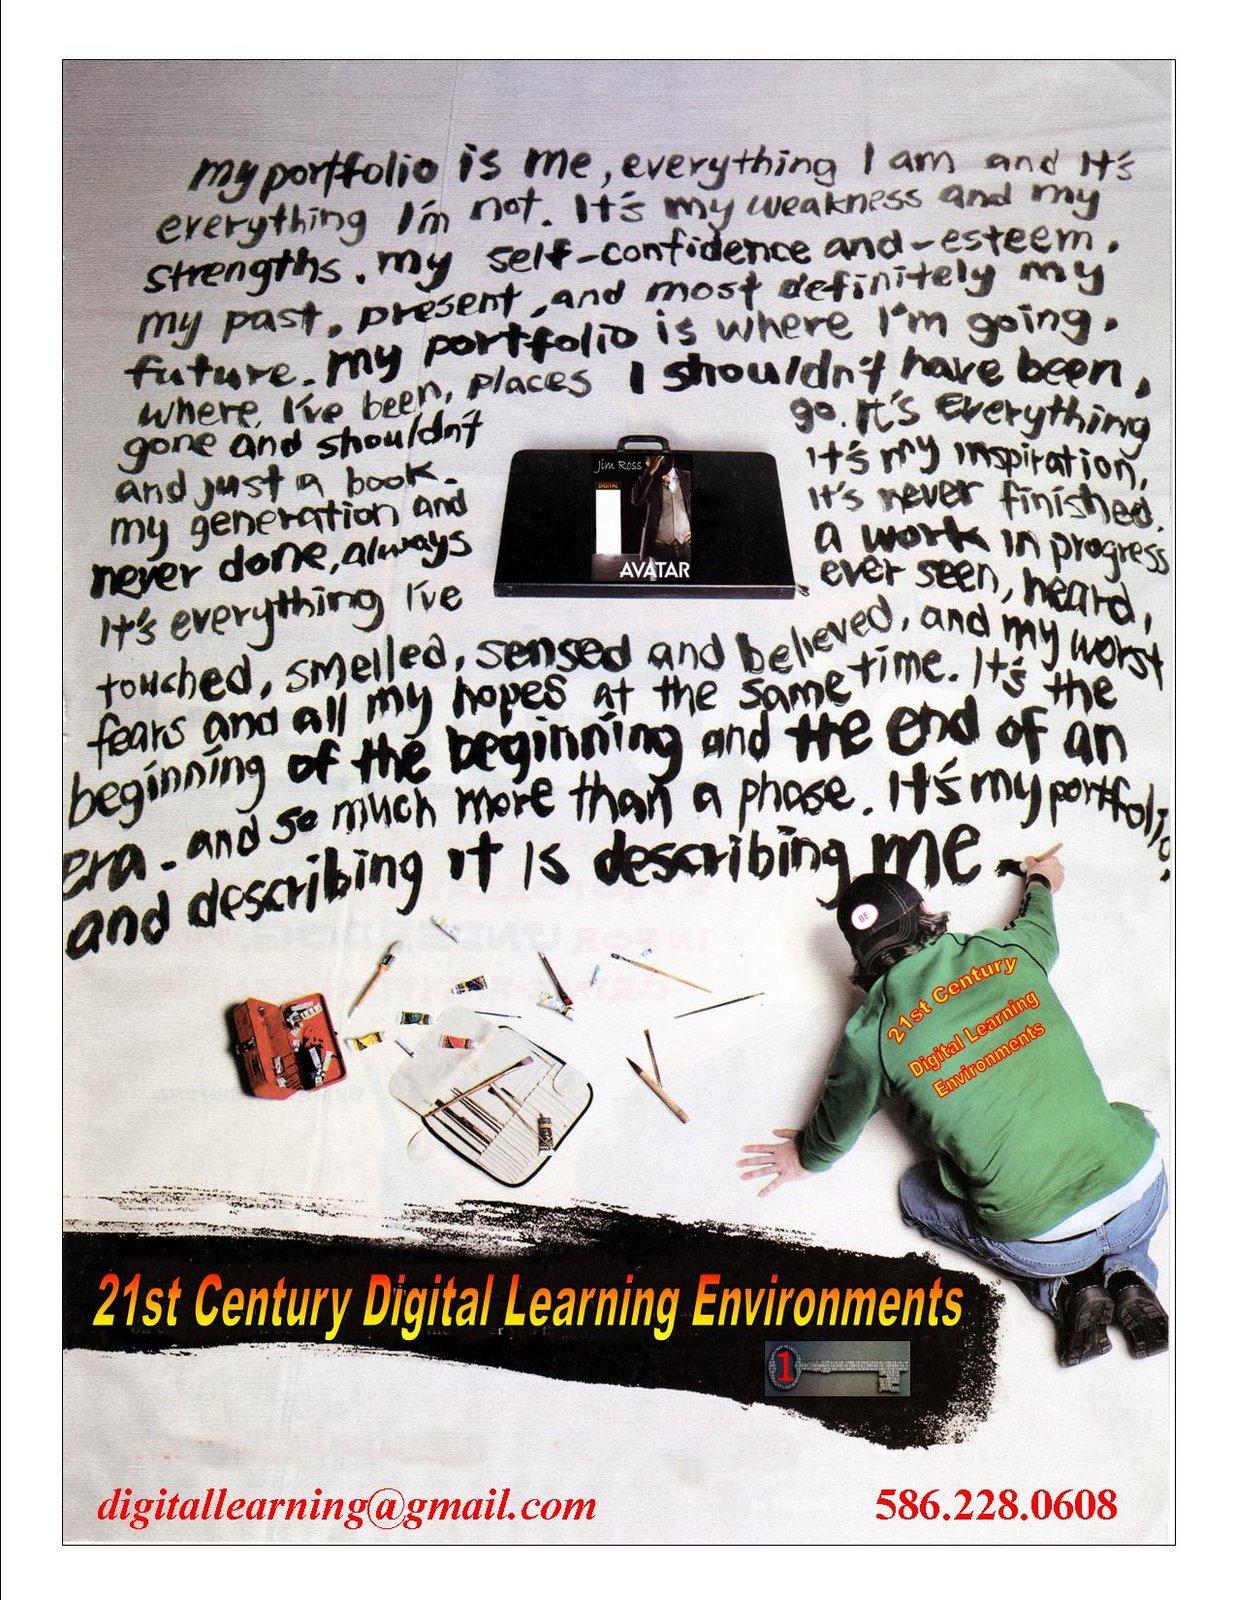 [Jim+Ross+Portfolio+21st+Century+Digital+Learning+Environments+9-11-2007.jpg]